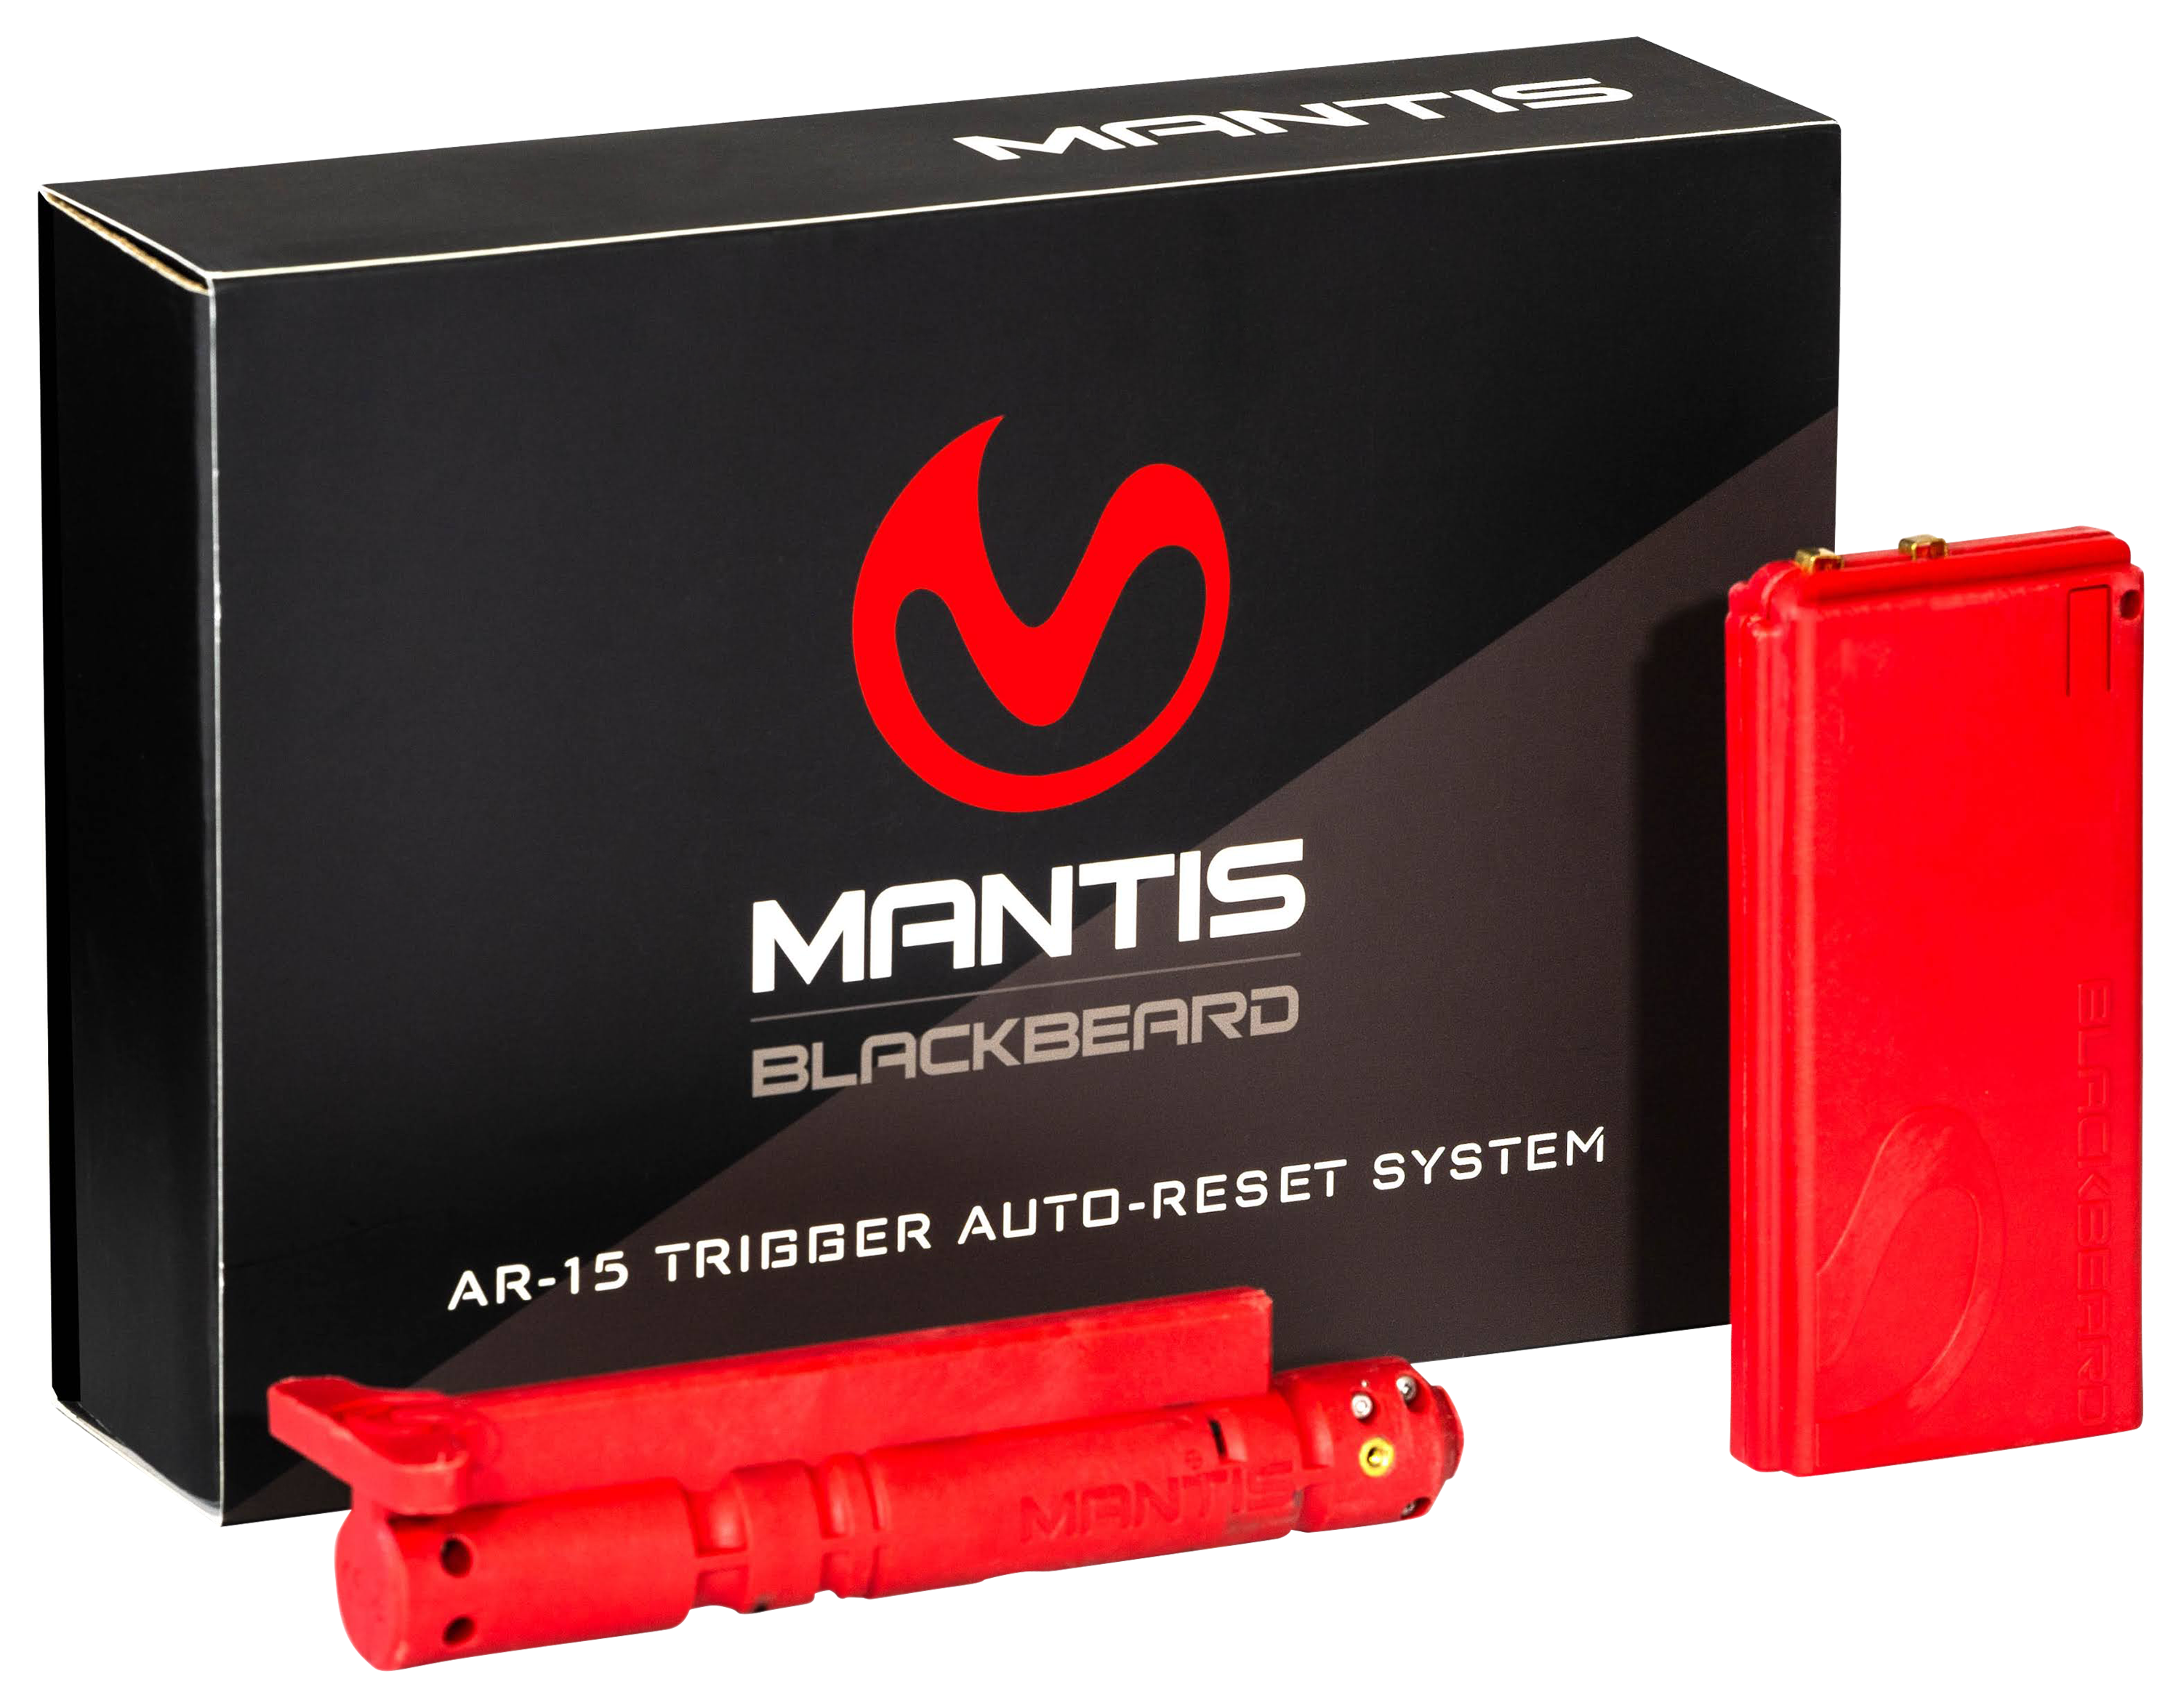 Mantis Blackbeard AR-15 Auto Resetting Trigger System